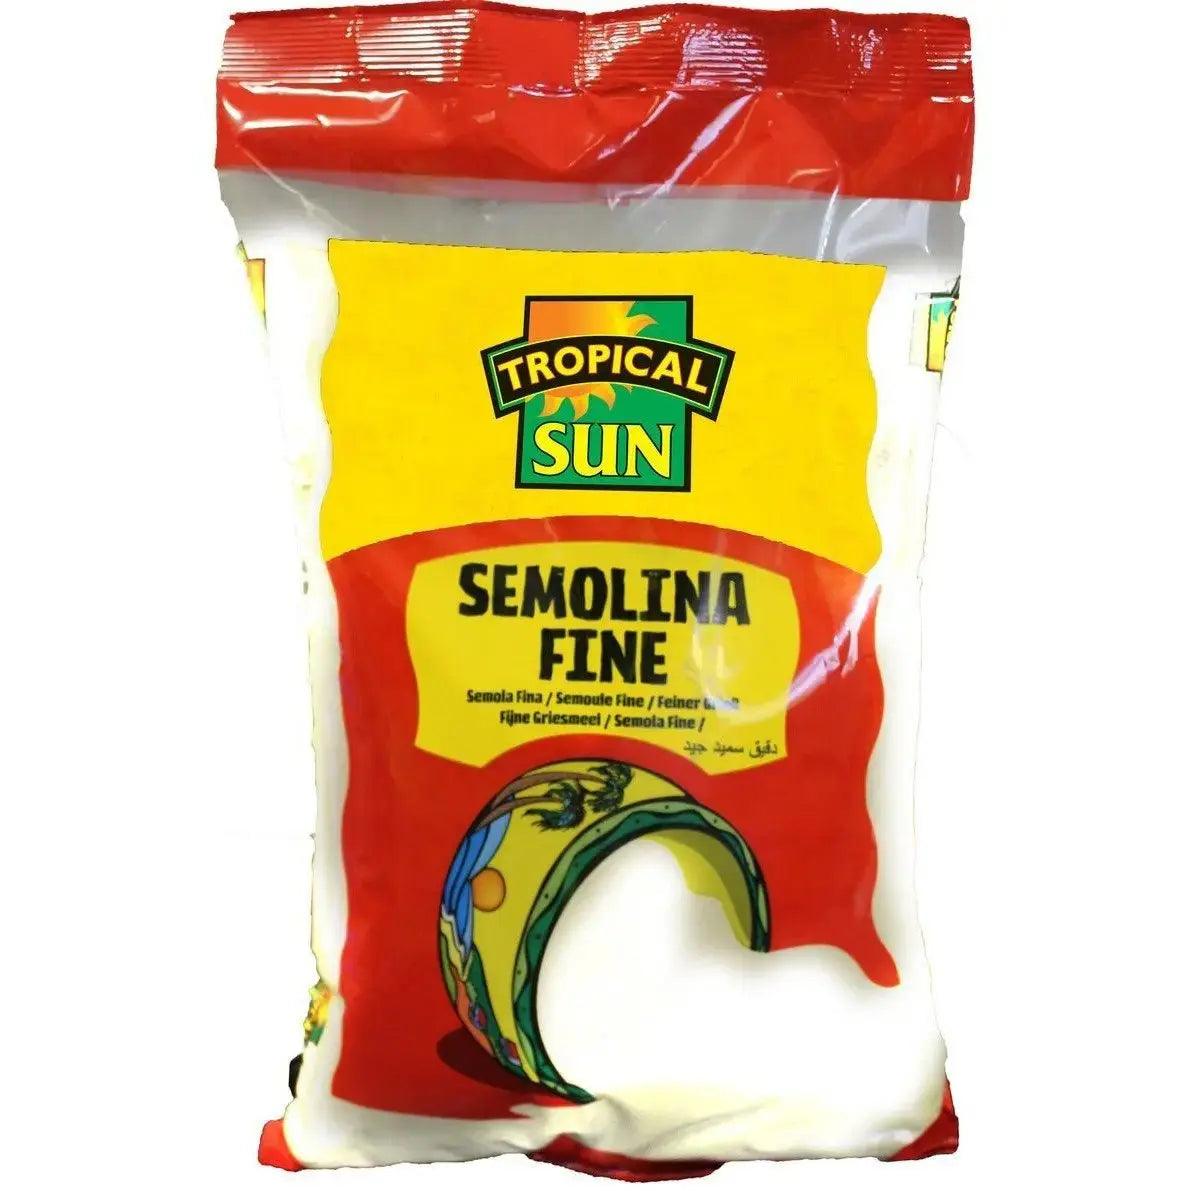 Tropical Sun Semolina Fine Low in fat - Honesty Sales U.K